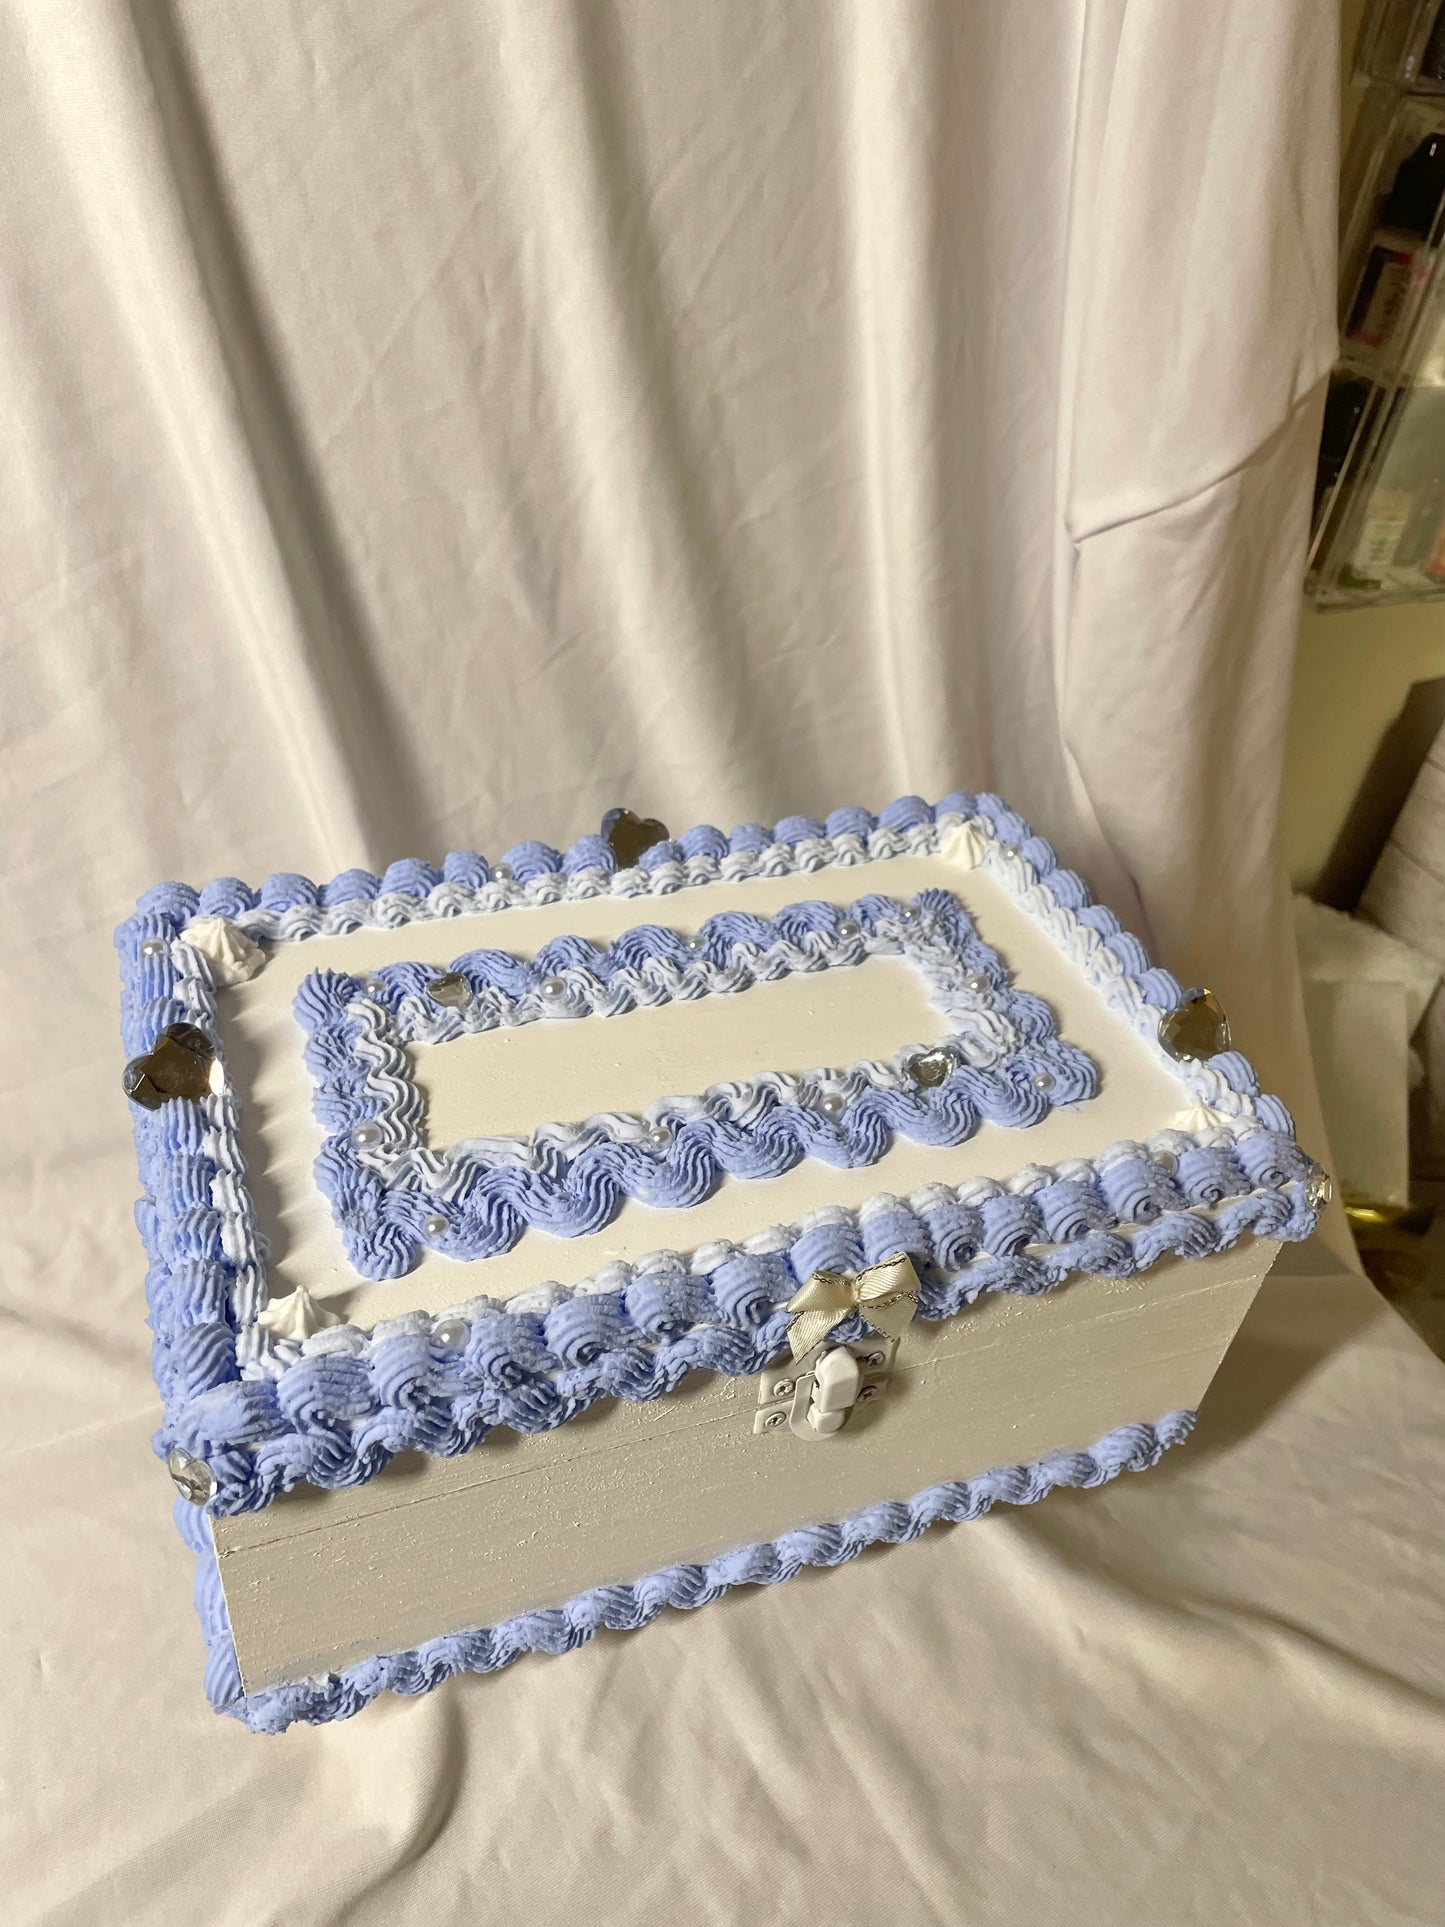 Baby blue & white wooden cake box